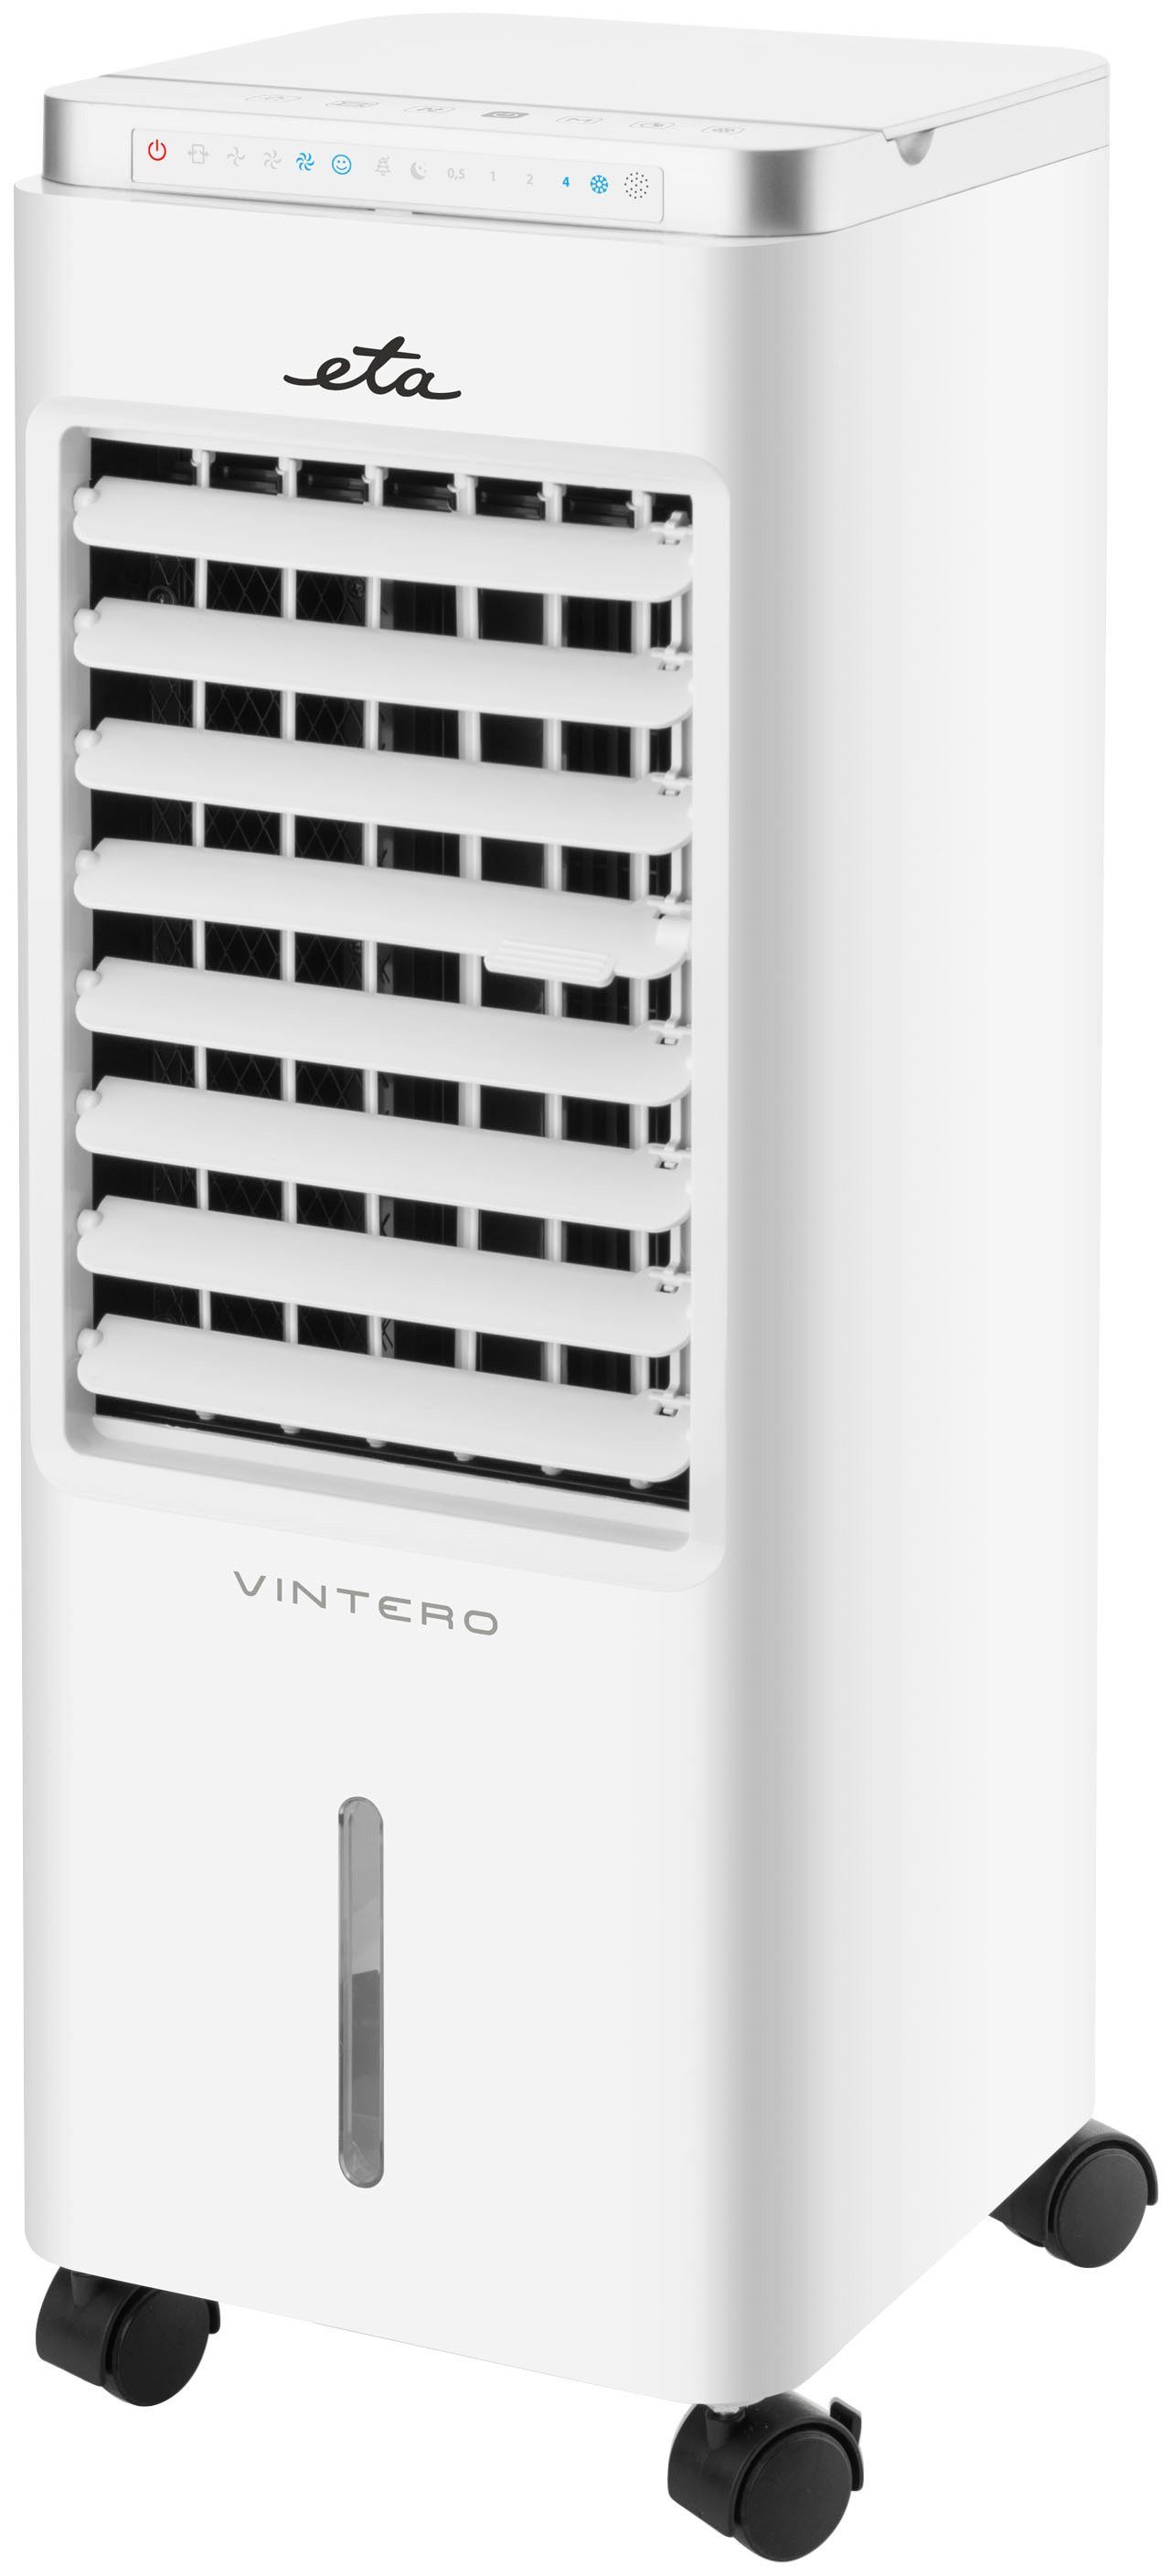 "Vintero", eta 3-in-1 Fassungsvermögen Luftkühler, 5,6 Ventilatorkombigerät l Befeuchter/Ventilator/Kühler